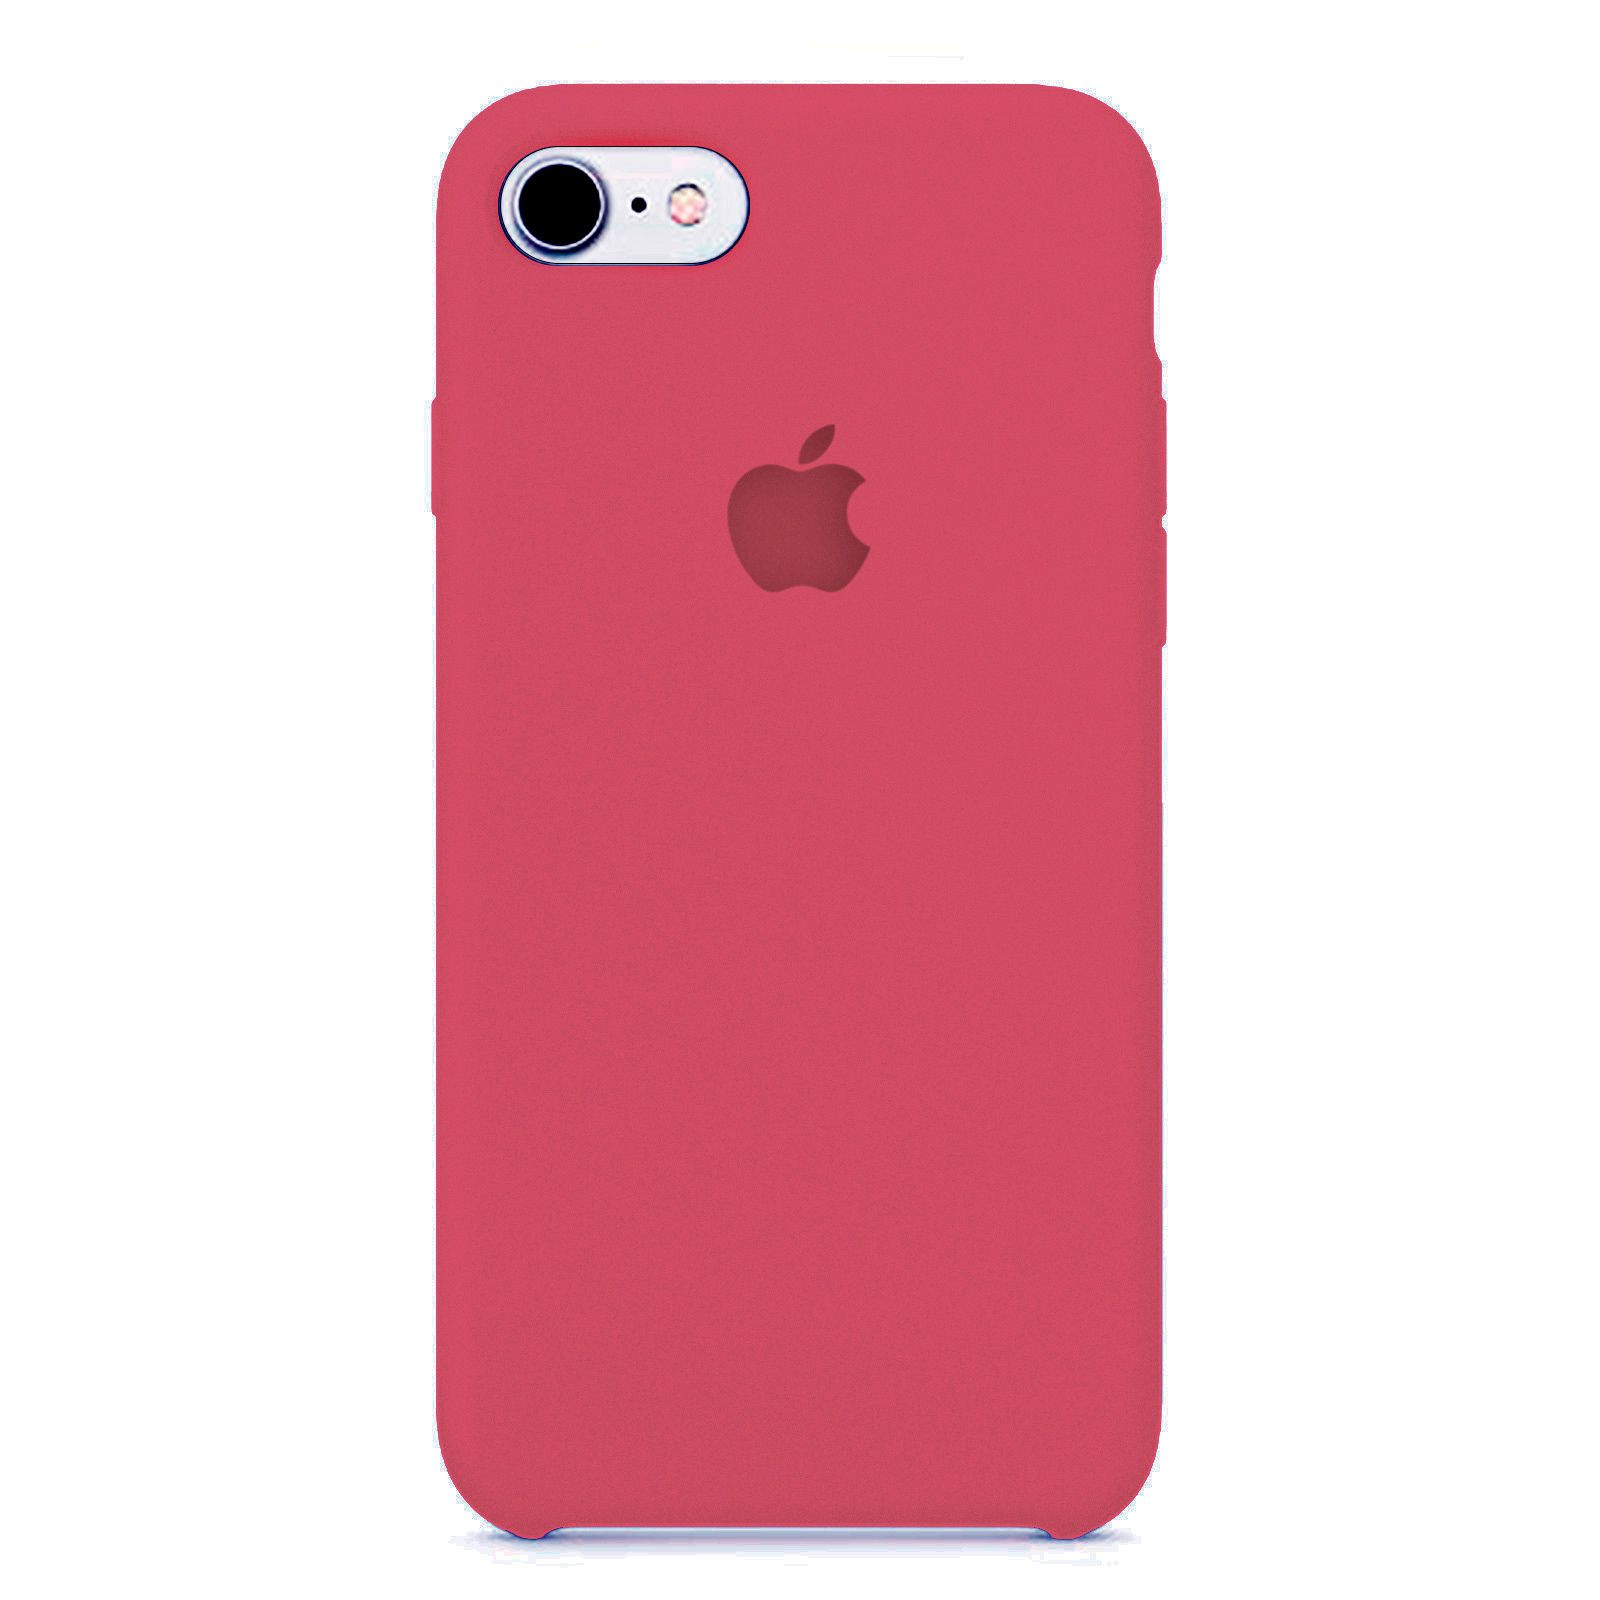 Capa Case Iphone 7 e 8 Silicone Apple Coral - Chic Outlet - Economize com  estilo!